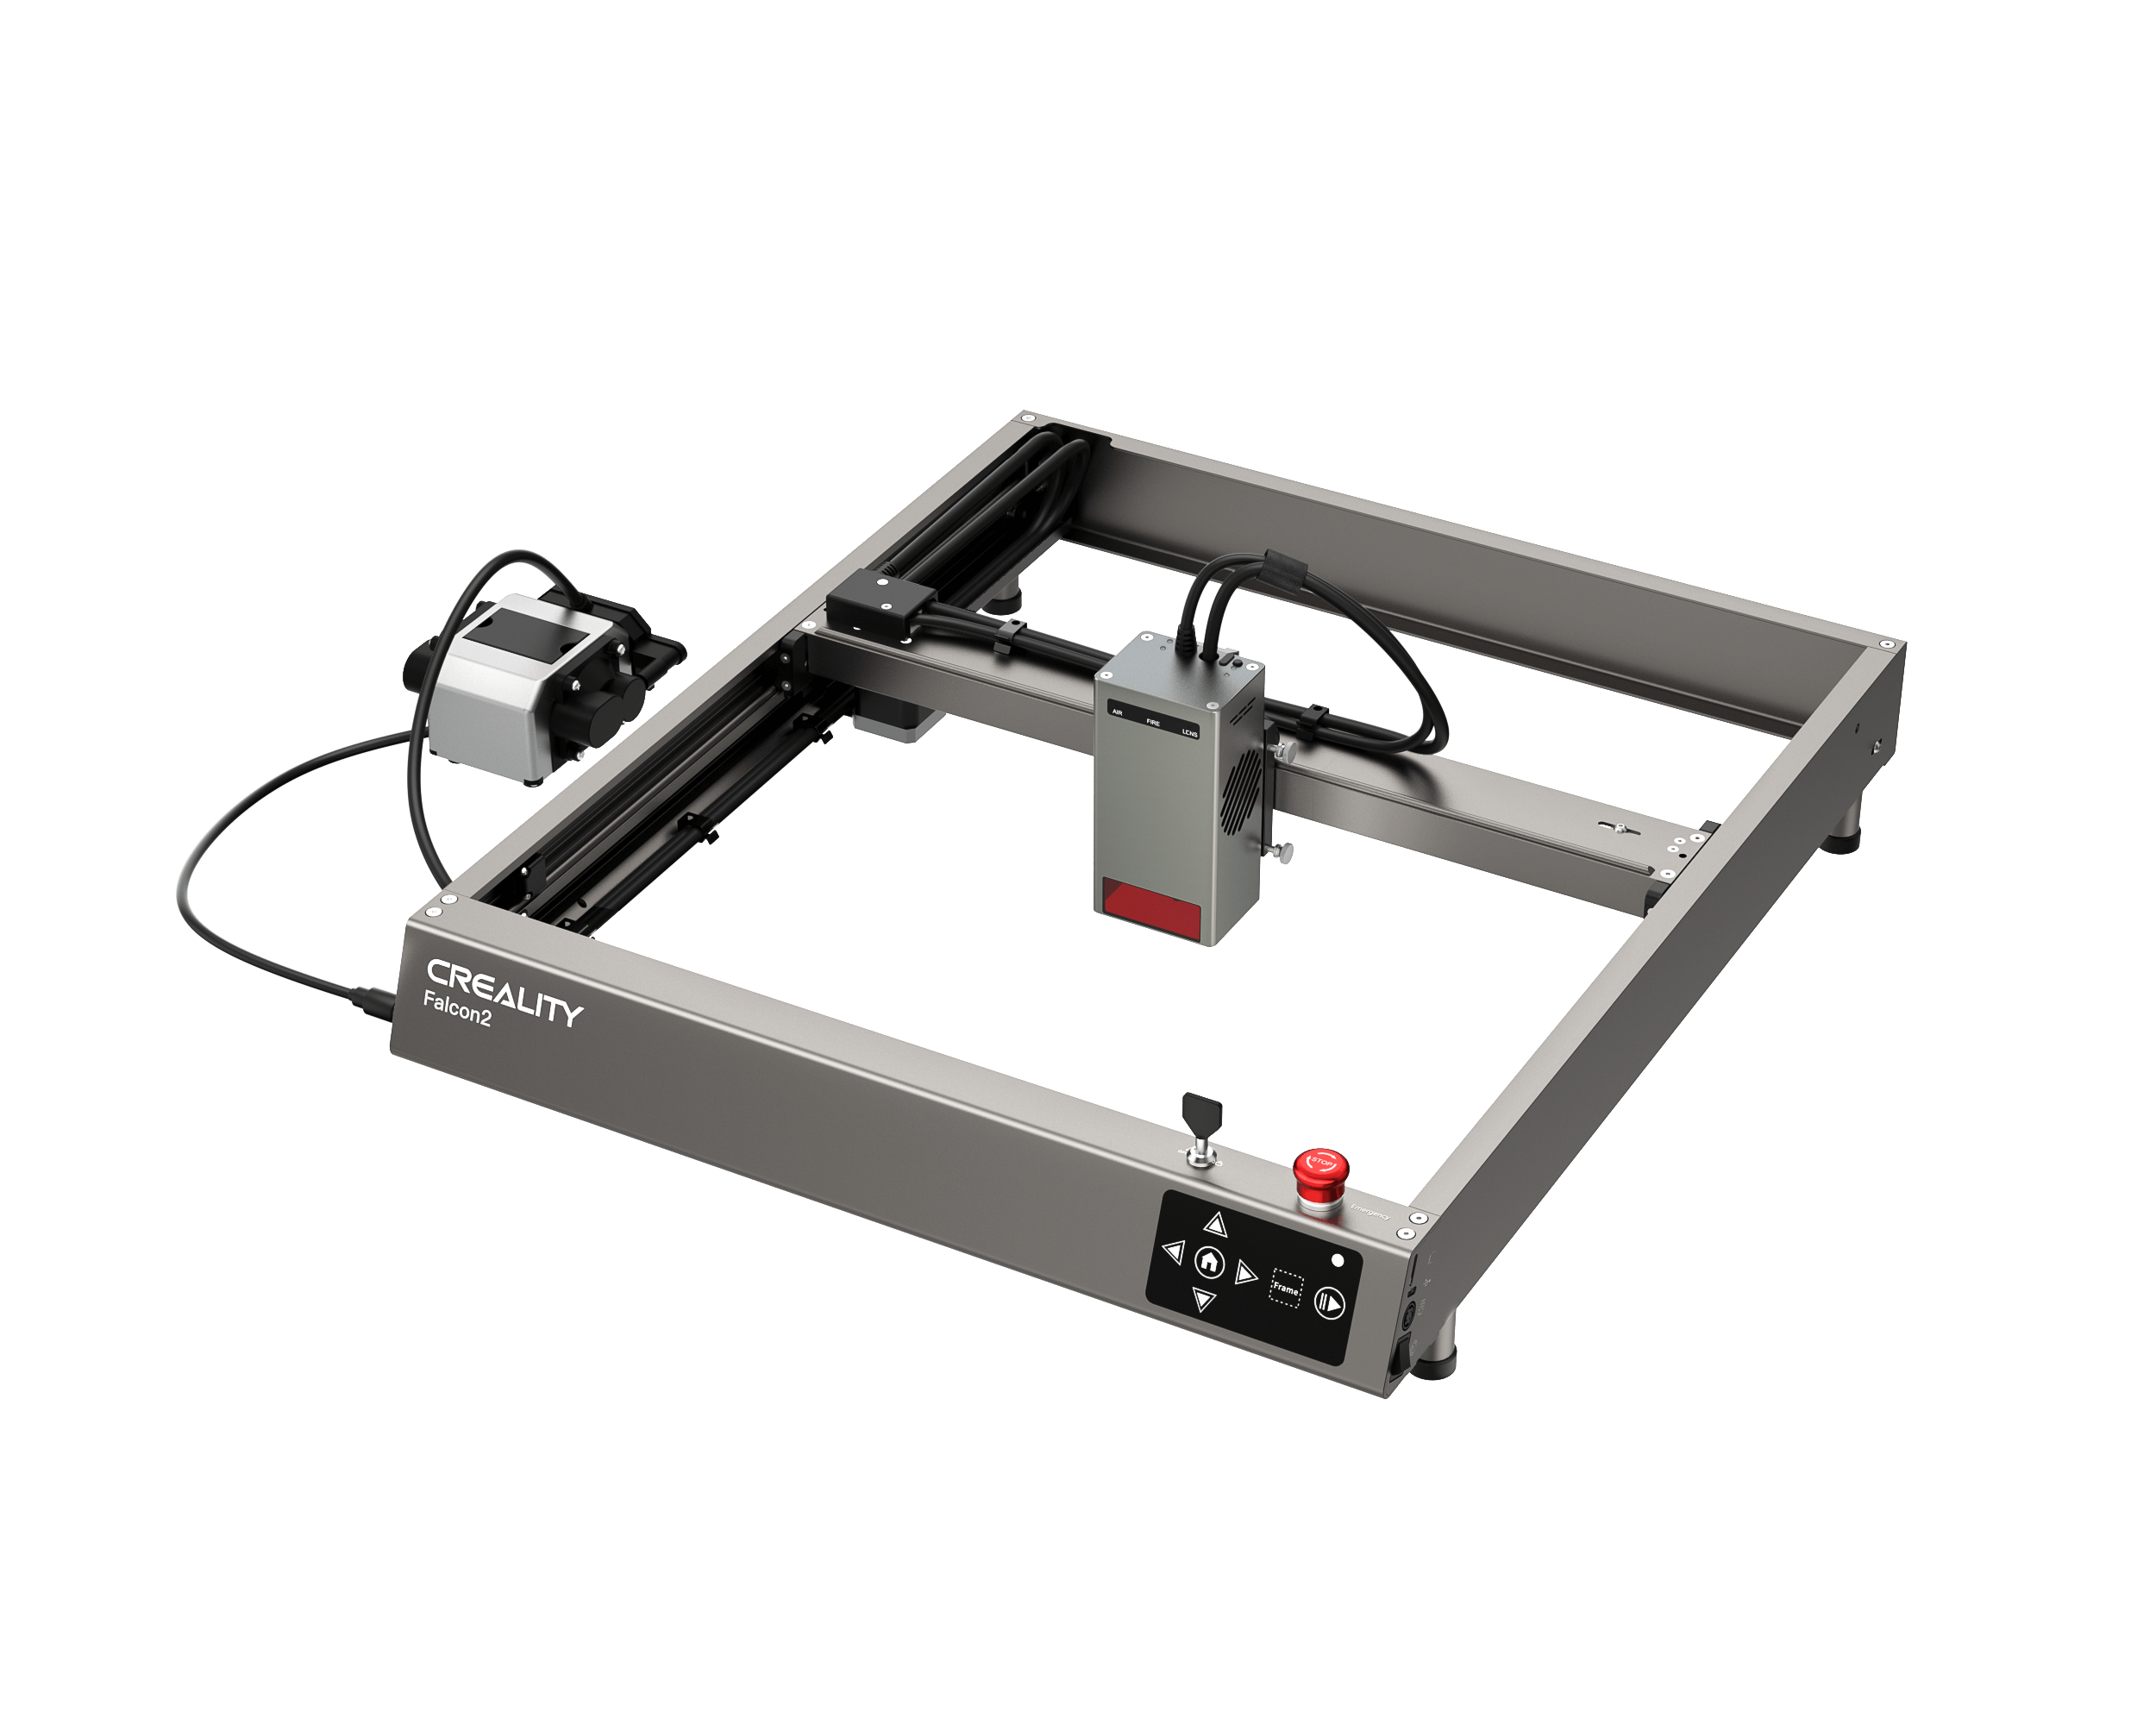 Creality Falcon2 40W Laser Engraver - 3DUncle